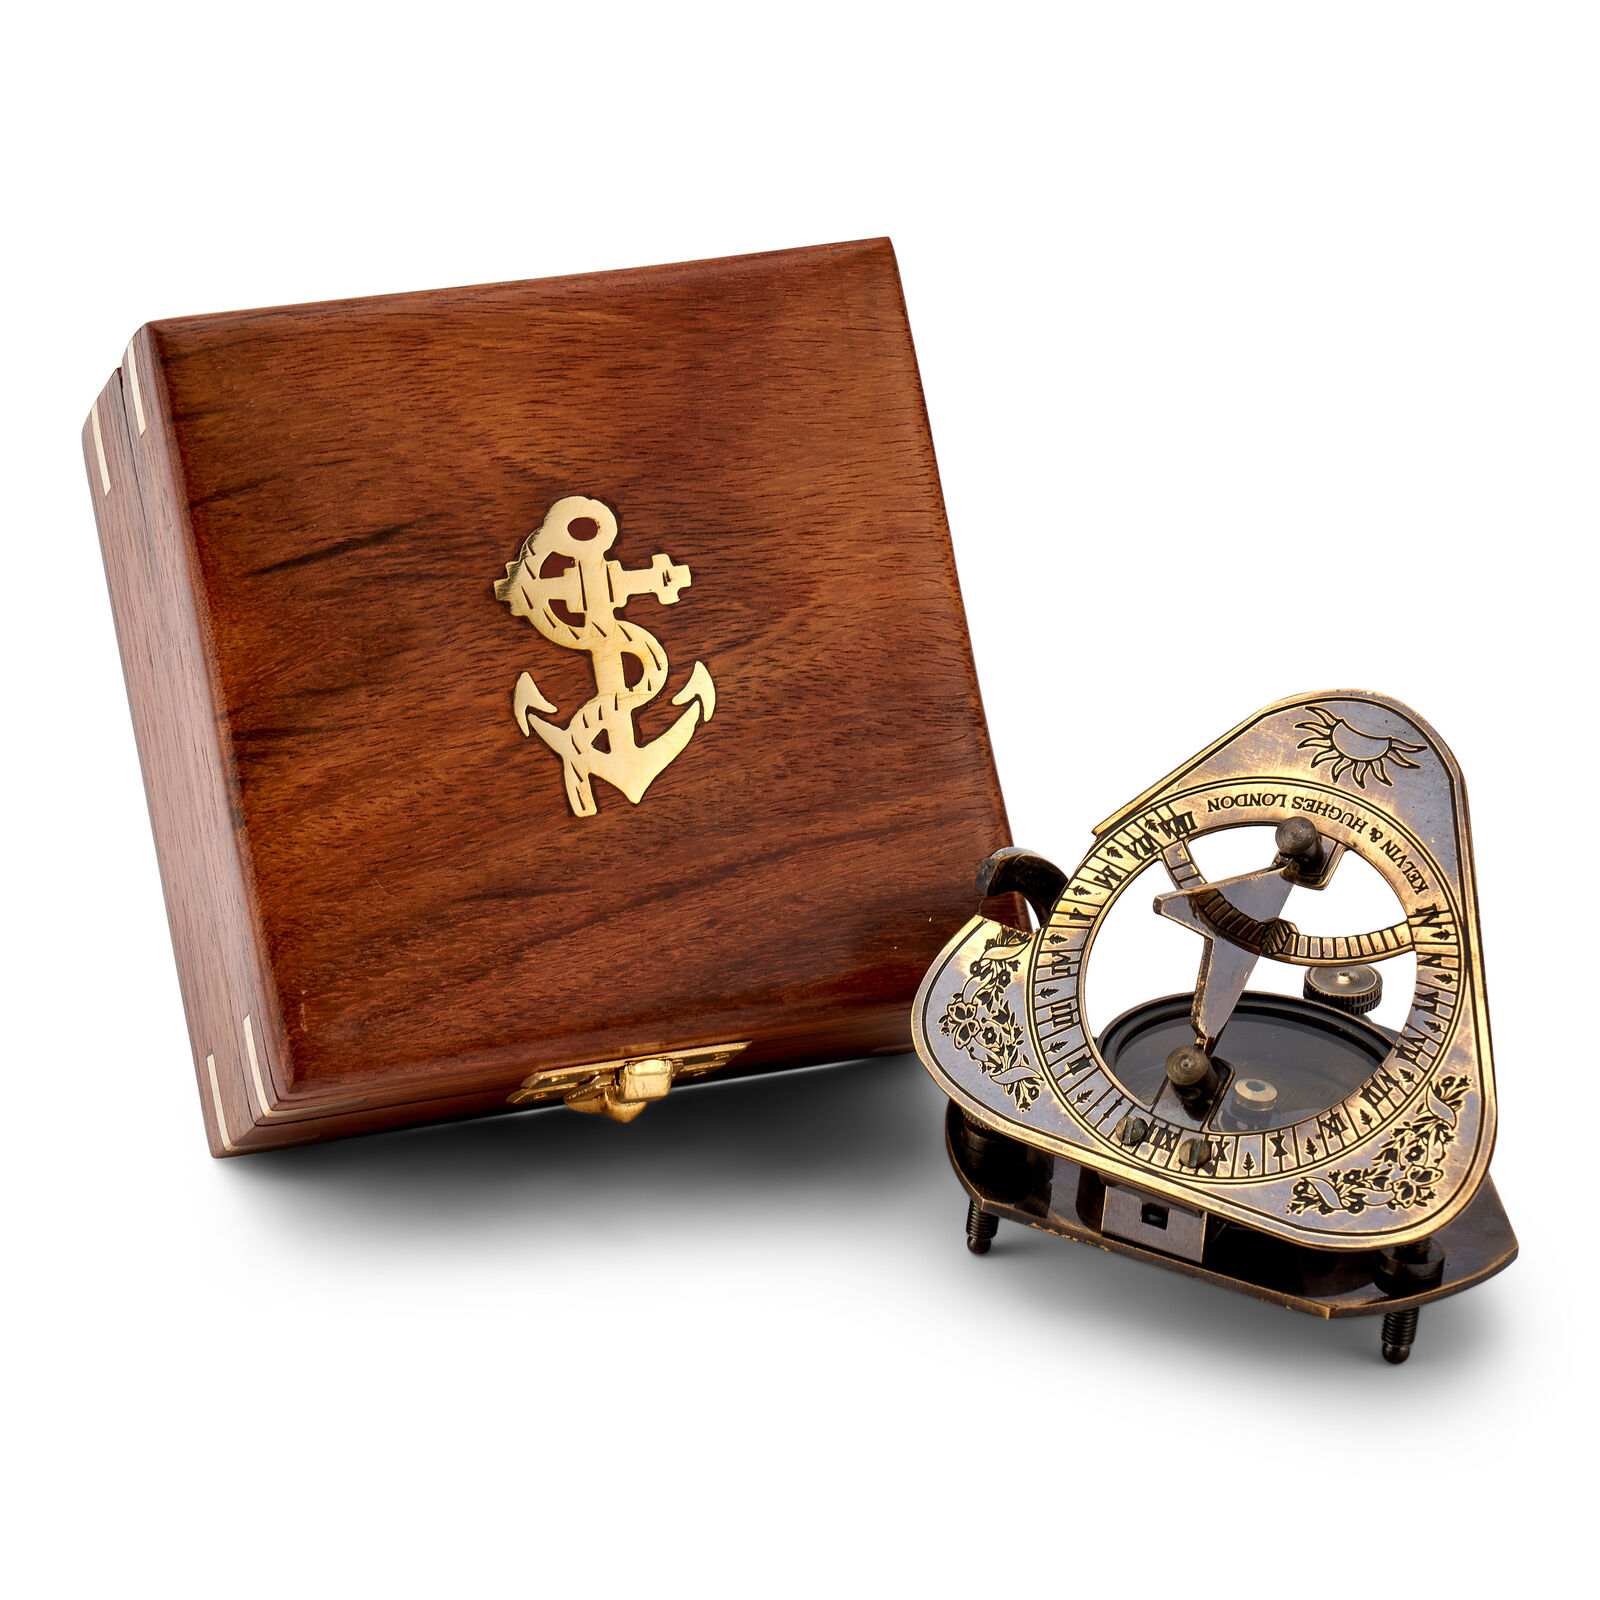 Sundial compass brass antique Roger\'s Rangers replica 8x8x6,5cm in wooden box